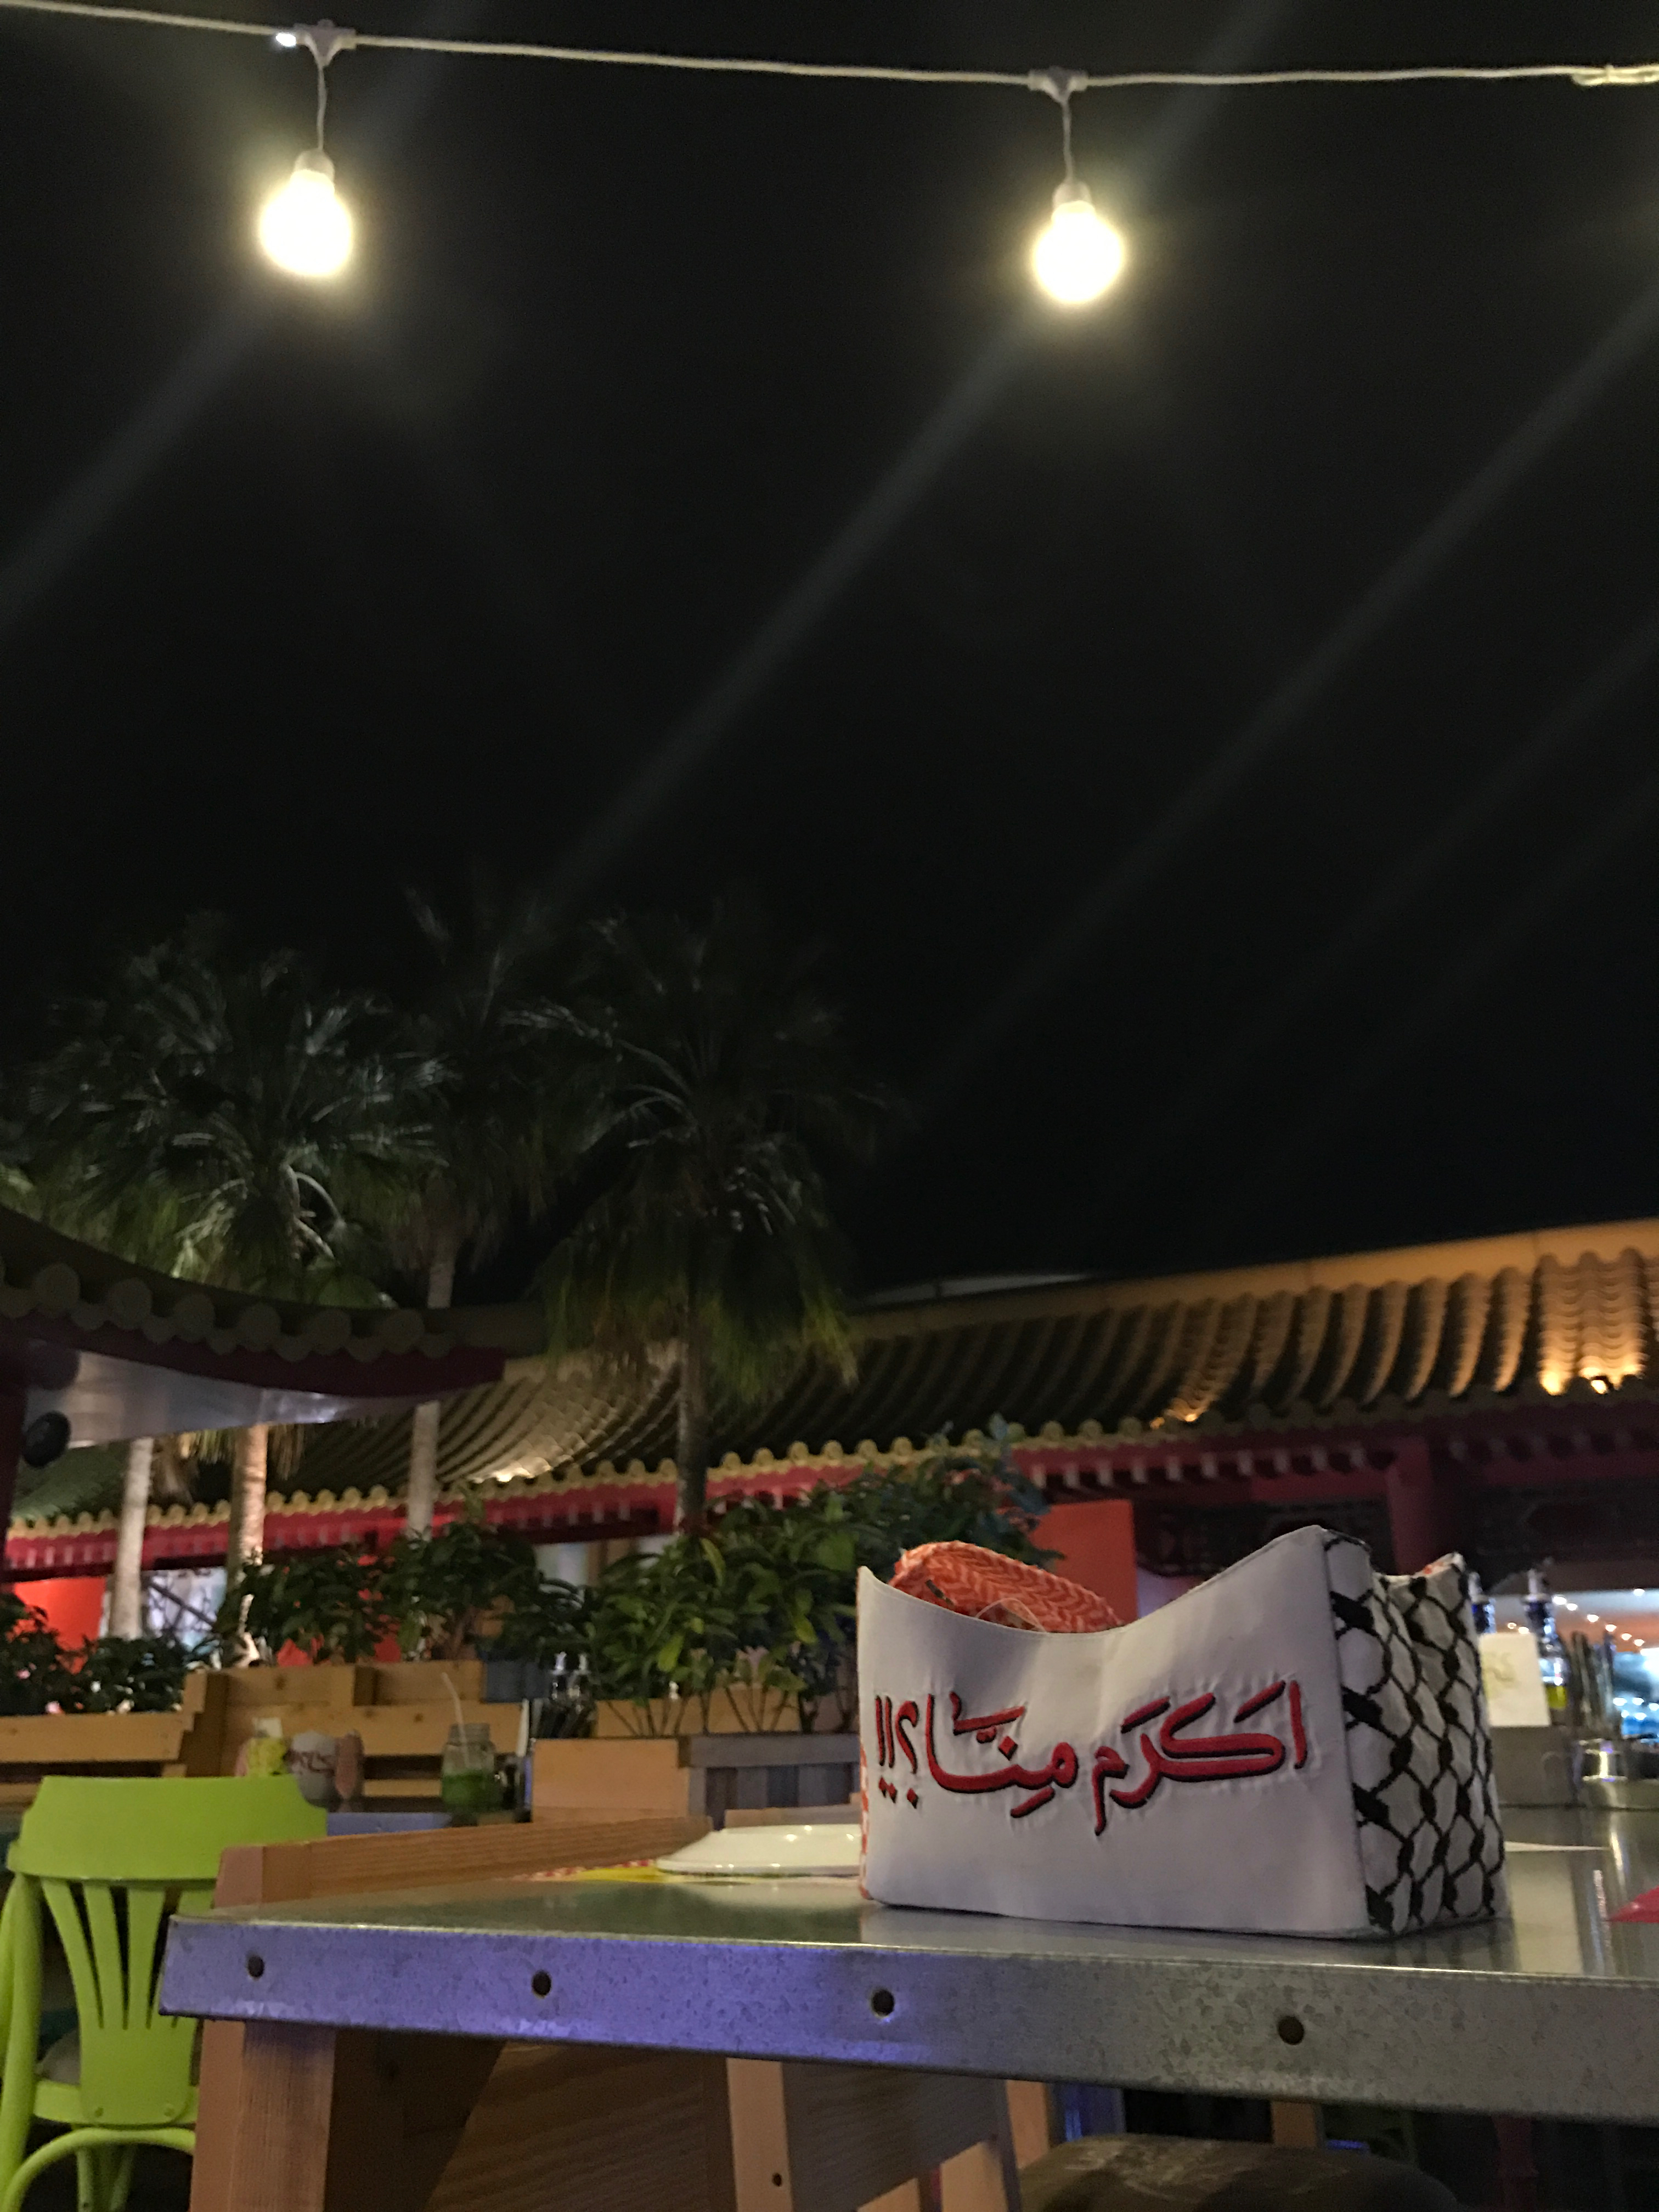 Ibn Battuta Outdoor Food Court - Zaroob 2